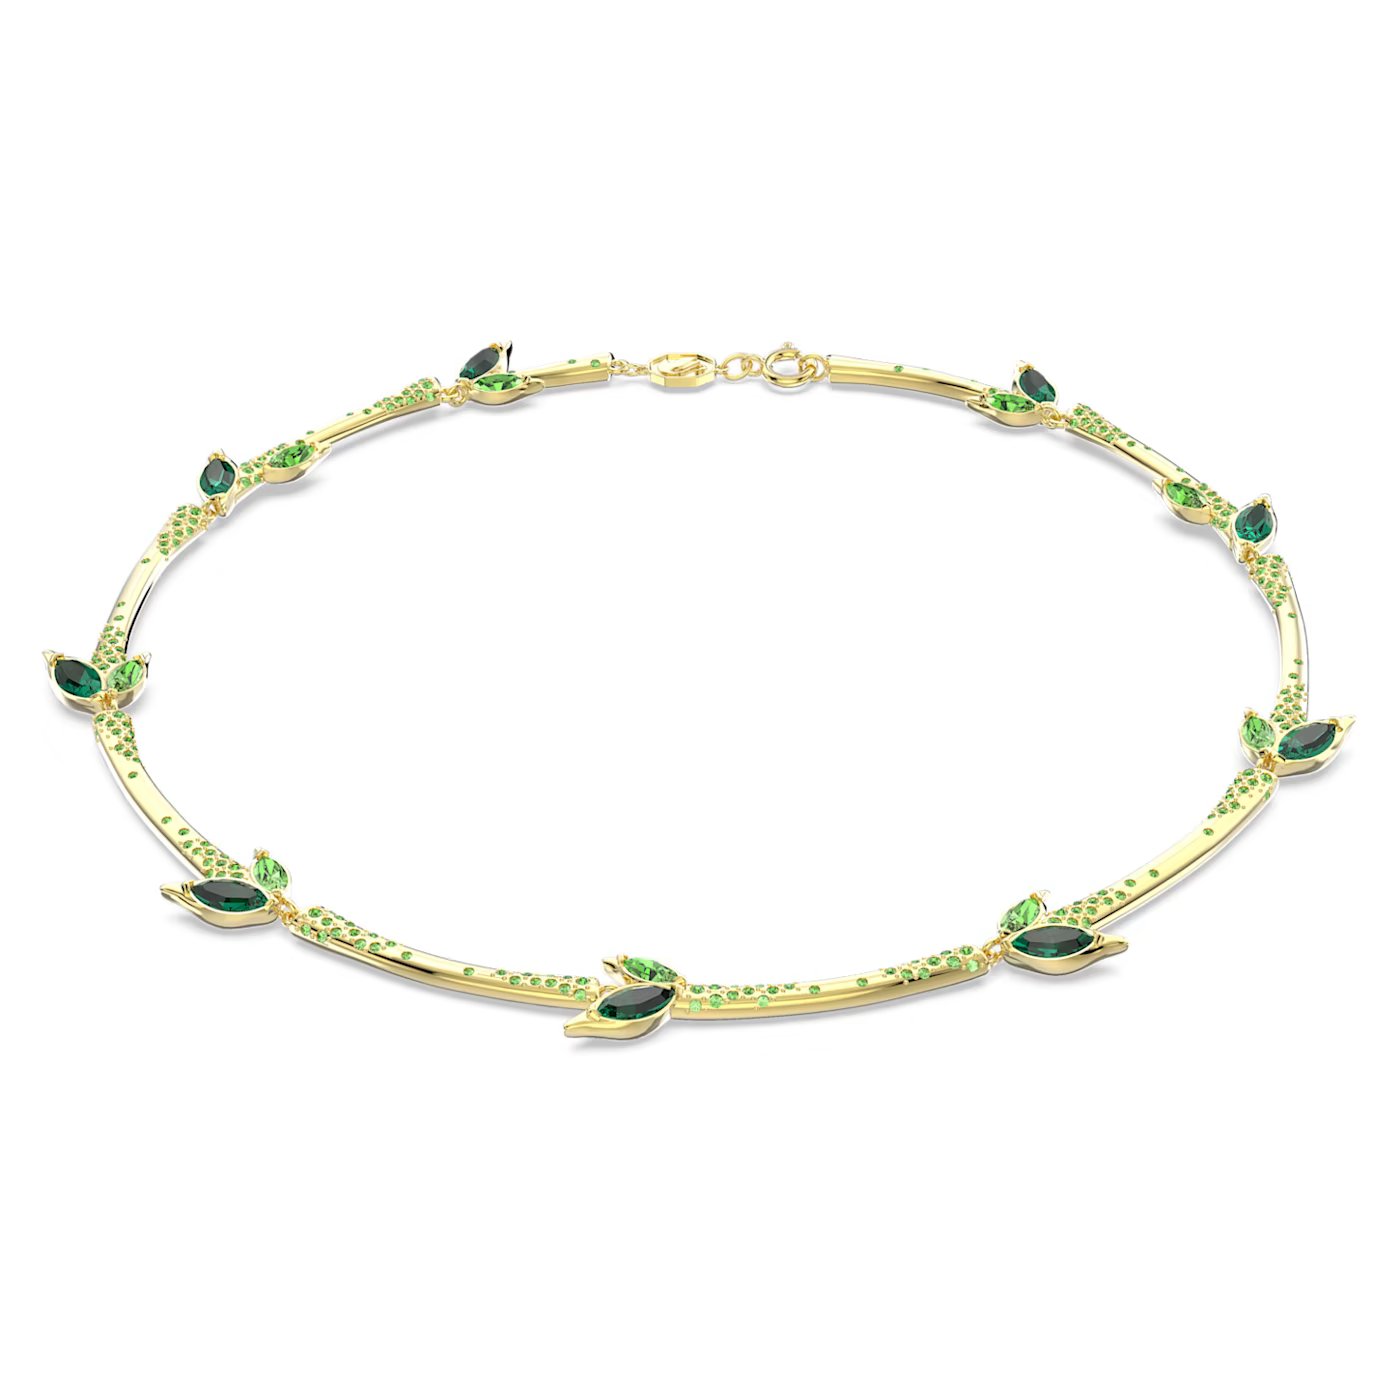 6331ac7ccd331_px-dellium-necklace--bamboo--green--gold-tone-plated-swarovski-5645367.jpg